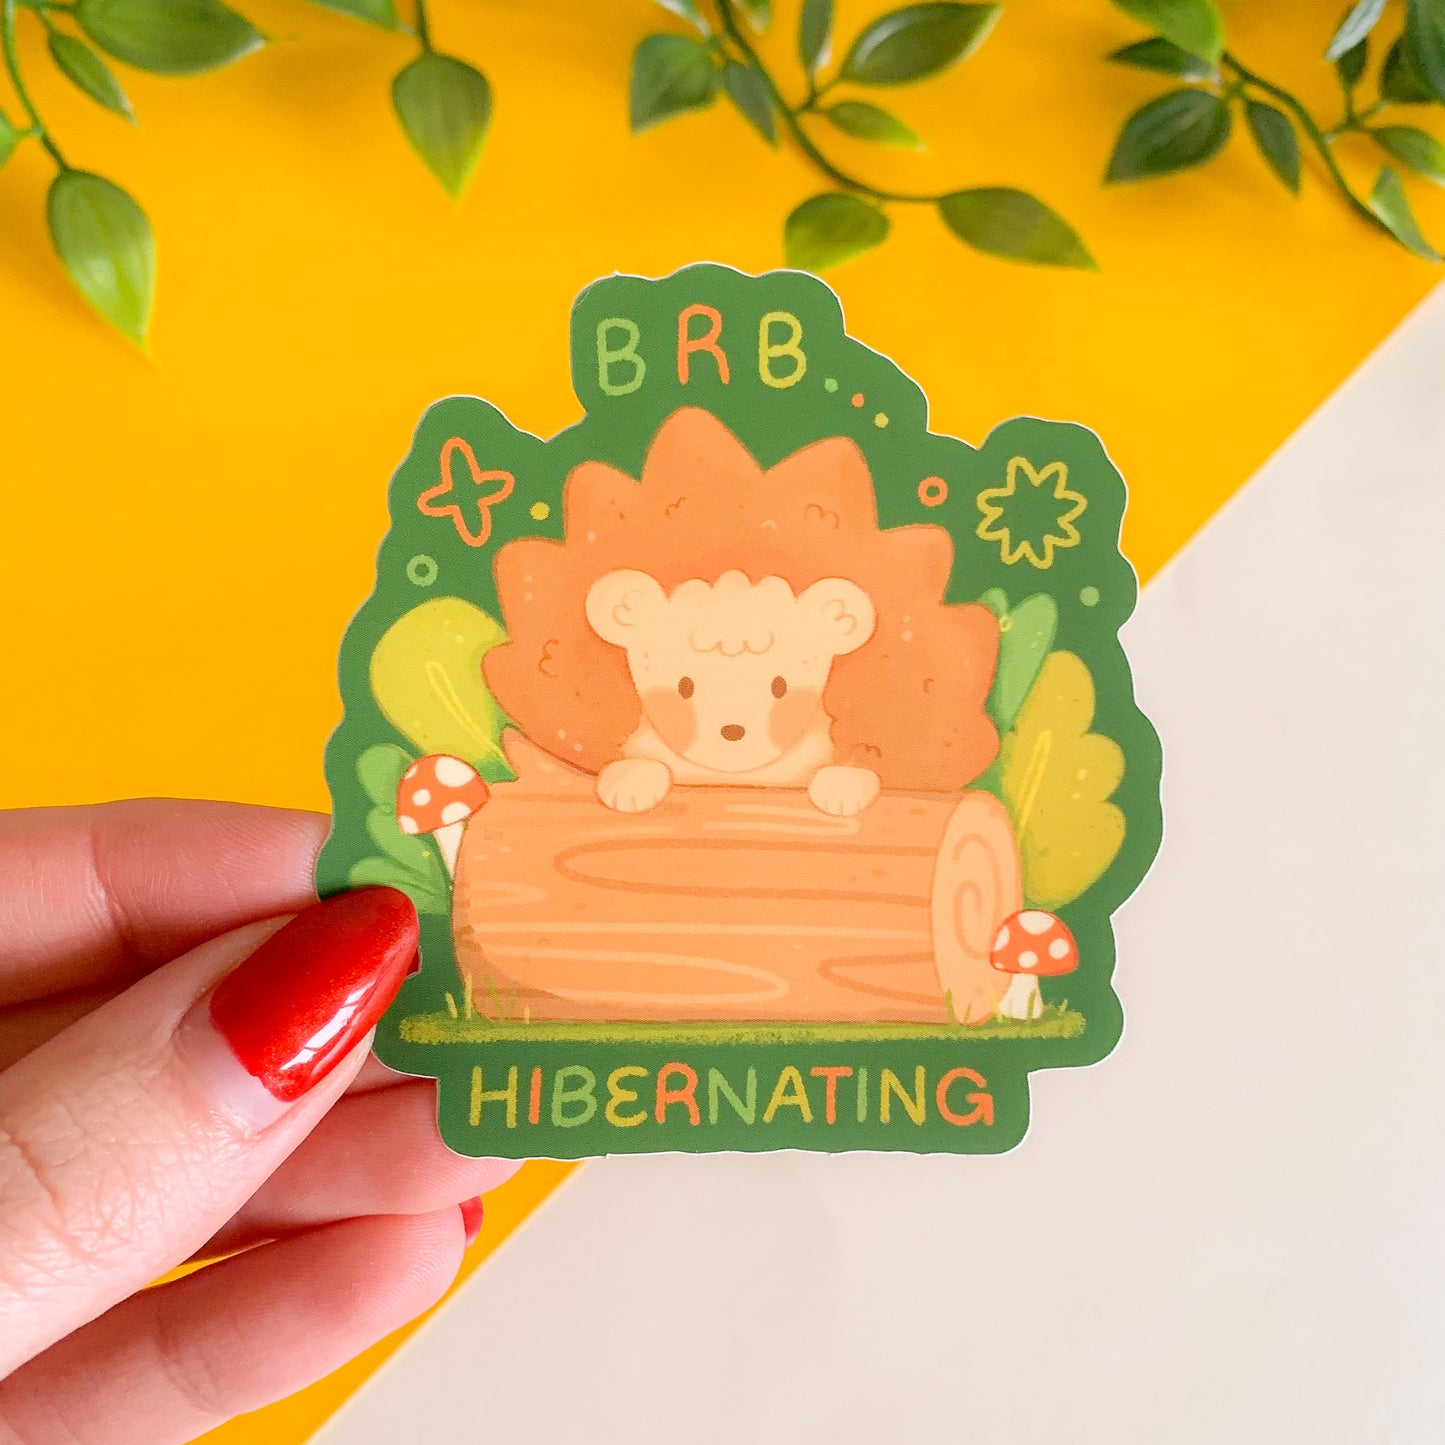 Hibernating Hedgehogs (Nov 22) Limited Edition Patreon Mushy Mail Bundle